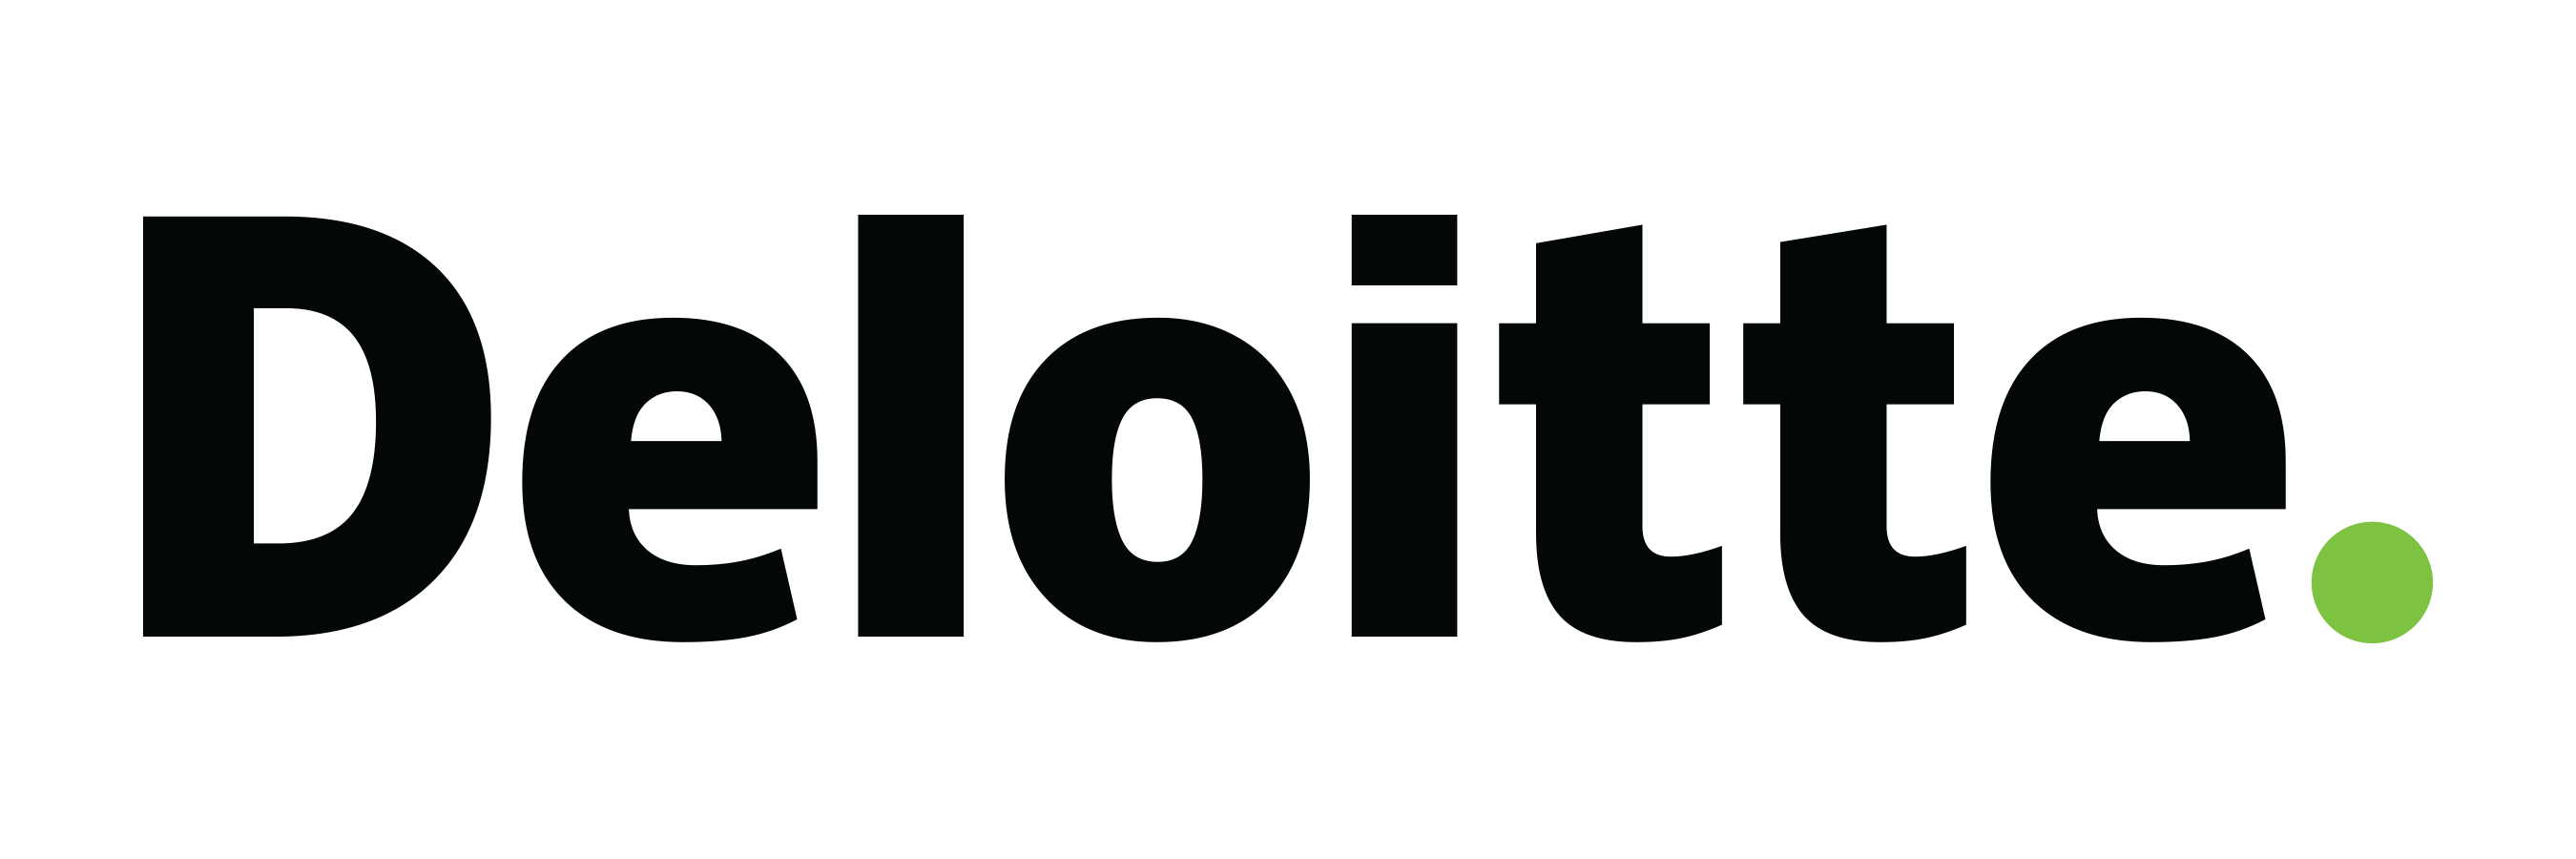 Deloitte Logo - logo-deloitte-photoshop - Alliance For Coffee Excellence